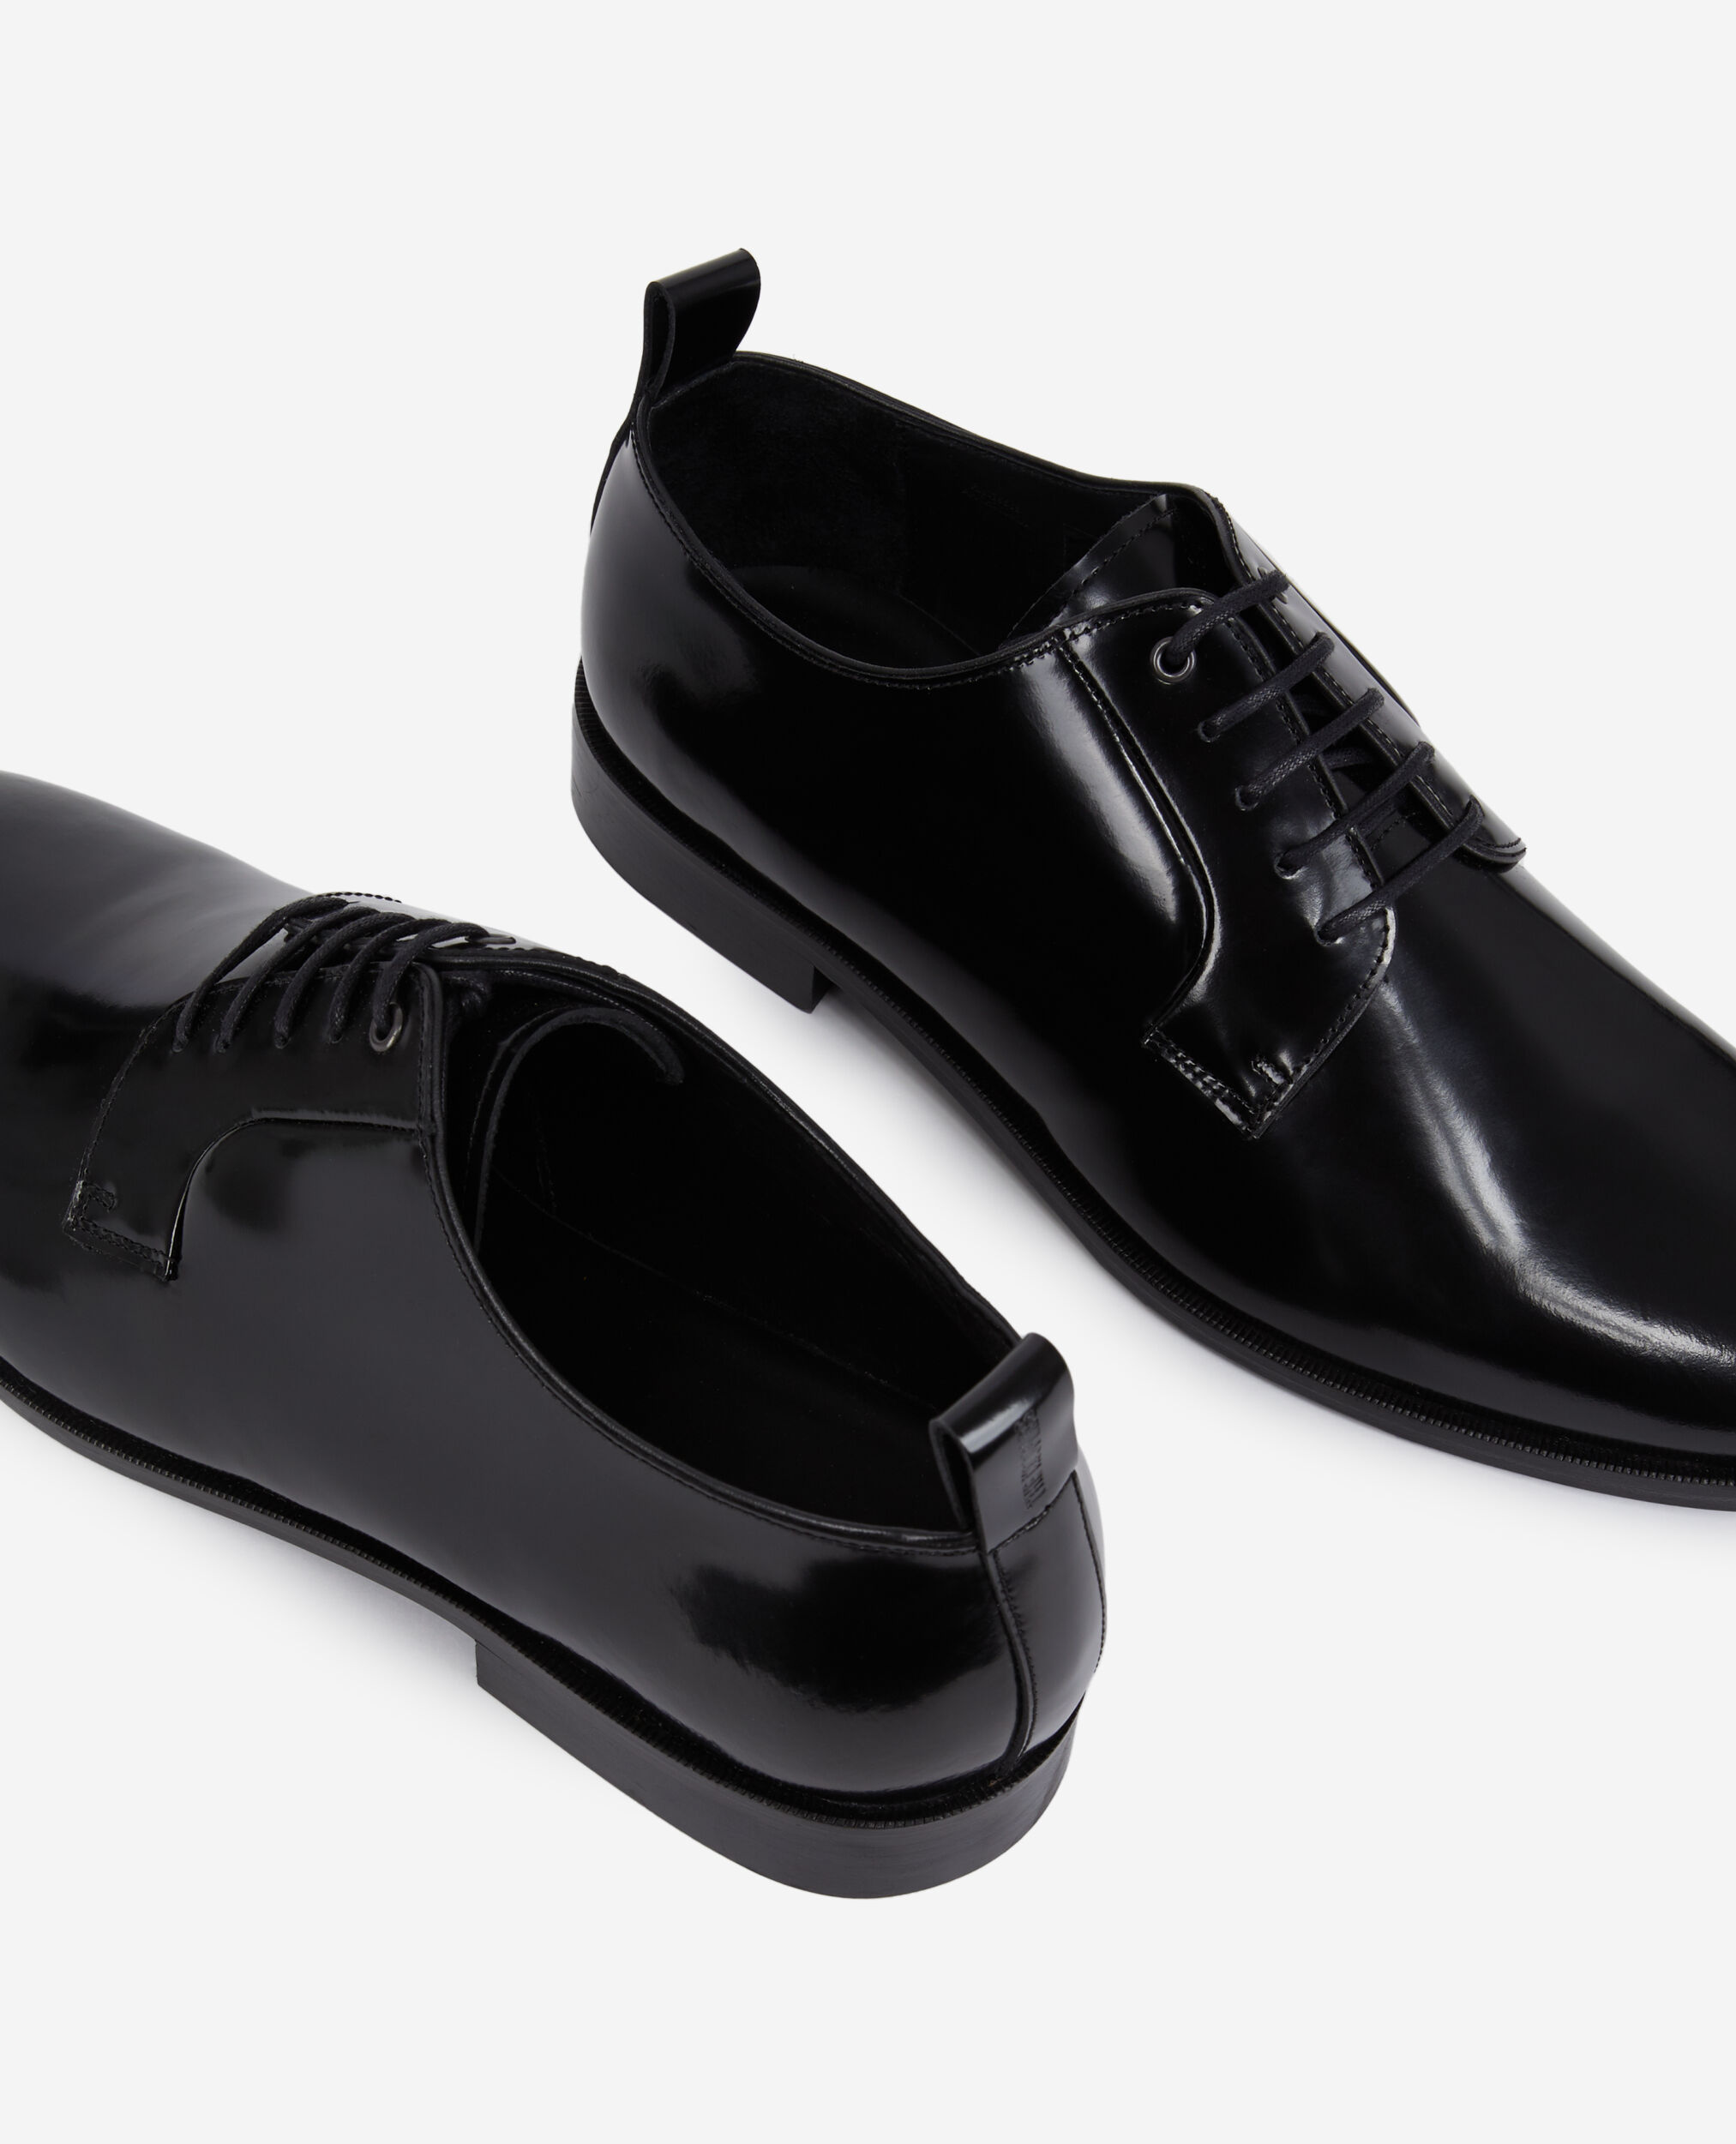 Amazon.com | New Men's Black Patent Leather Tuxedo Slip on Dress Shoes by  Azar (10 U.S (D) Medium) | Loafers & Slip-Ons